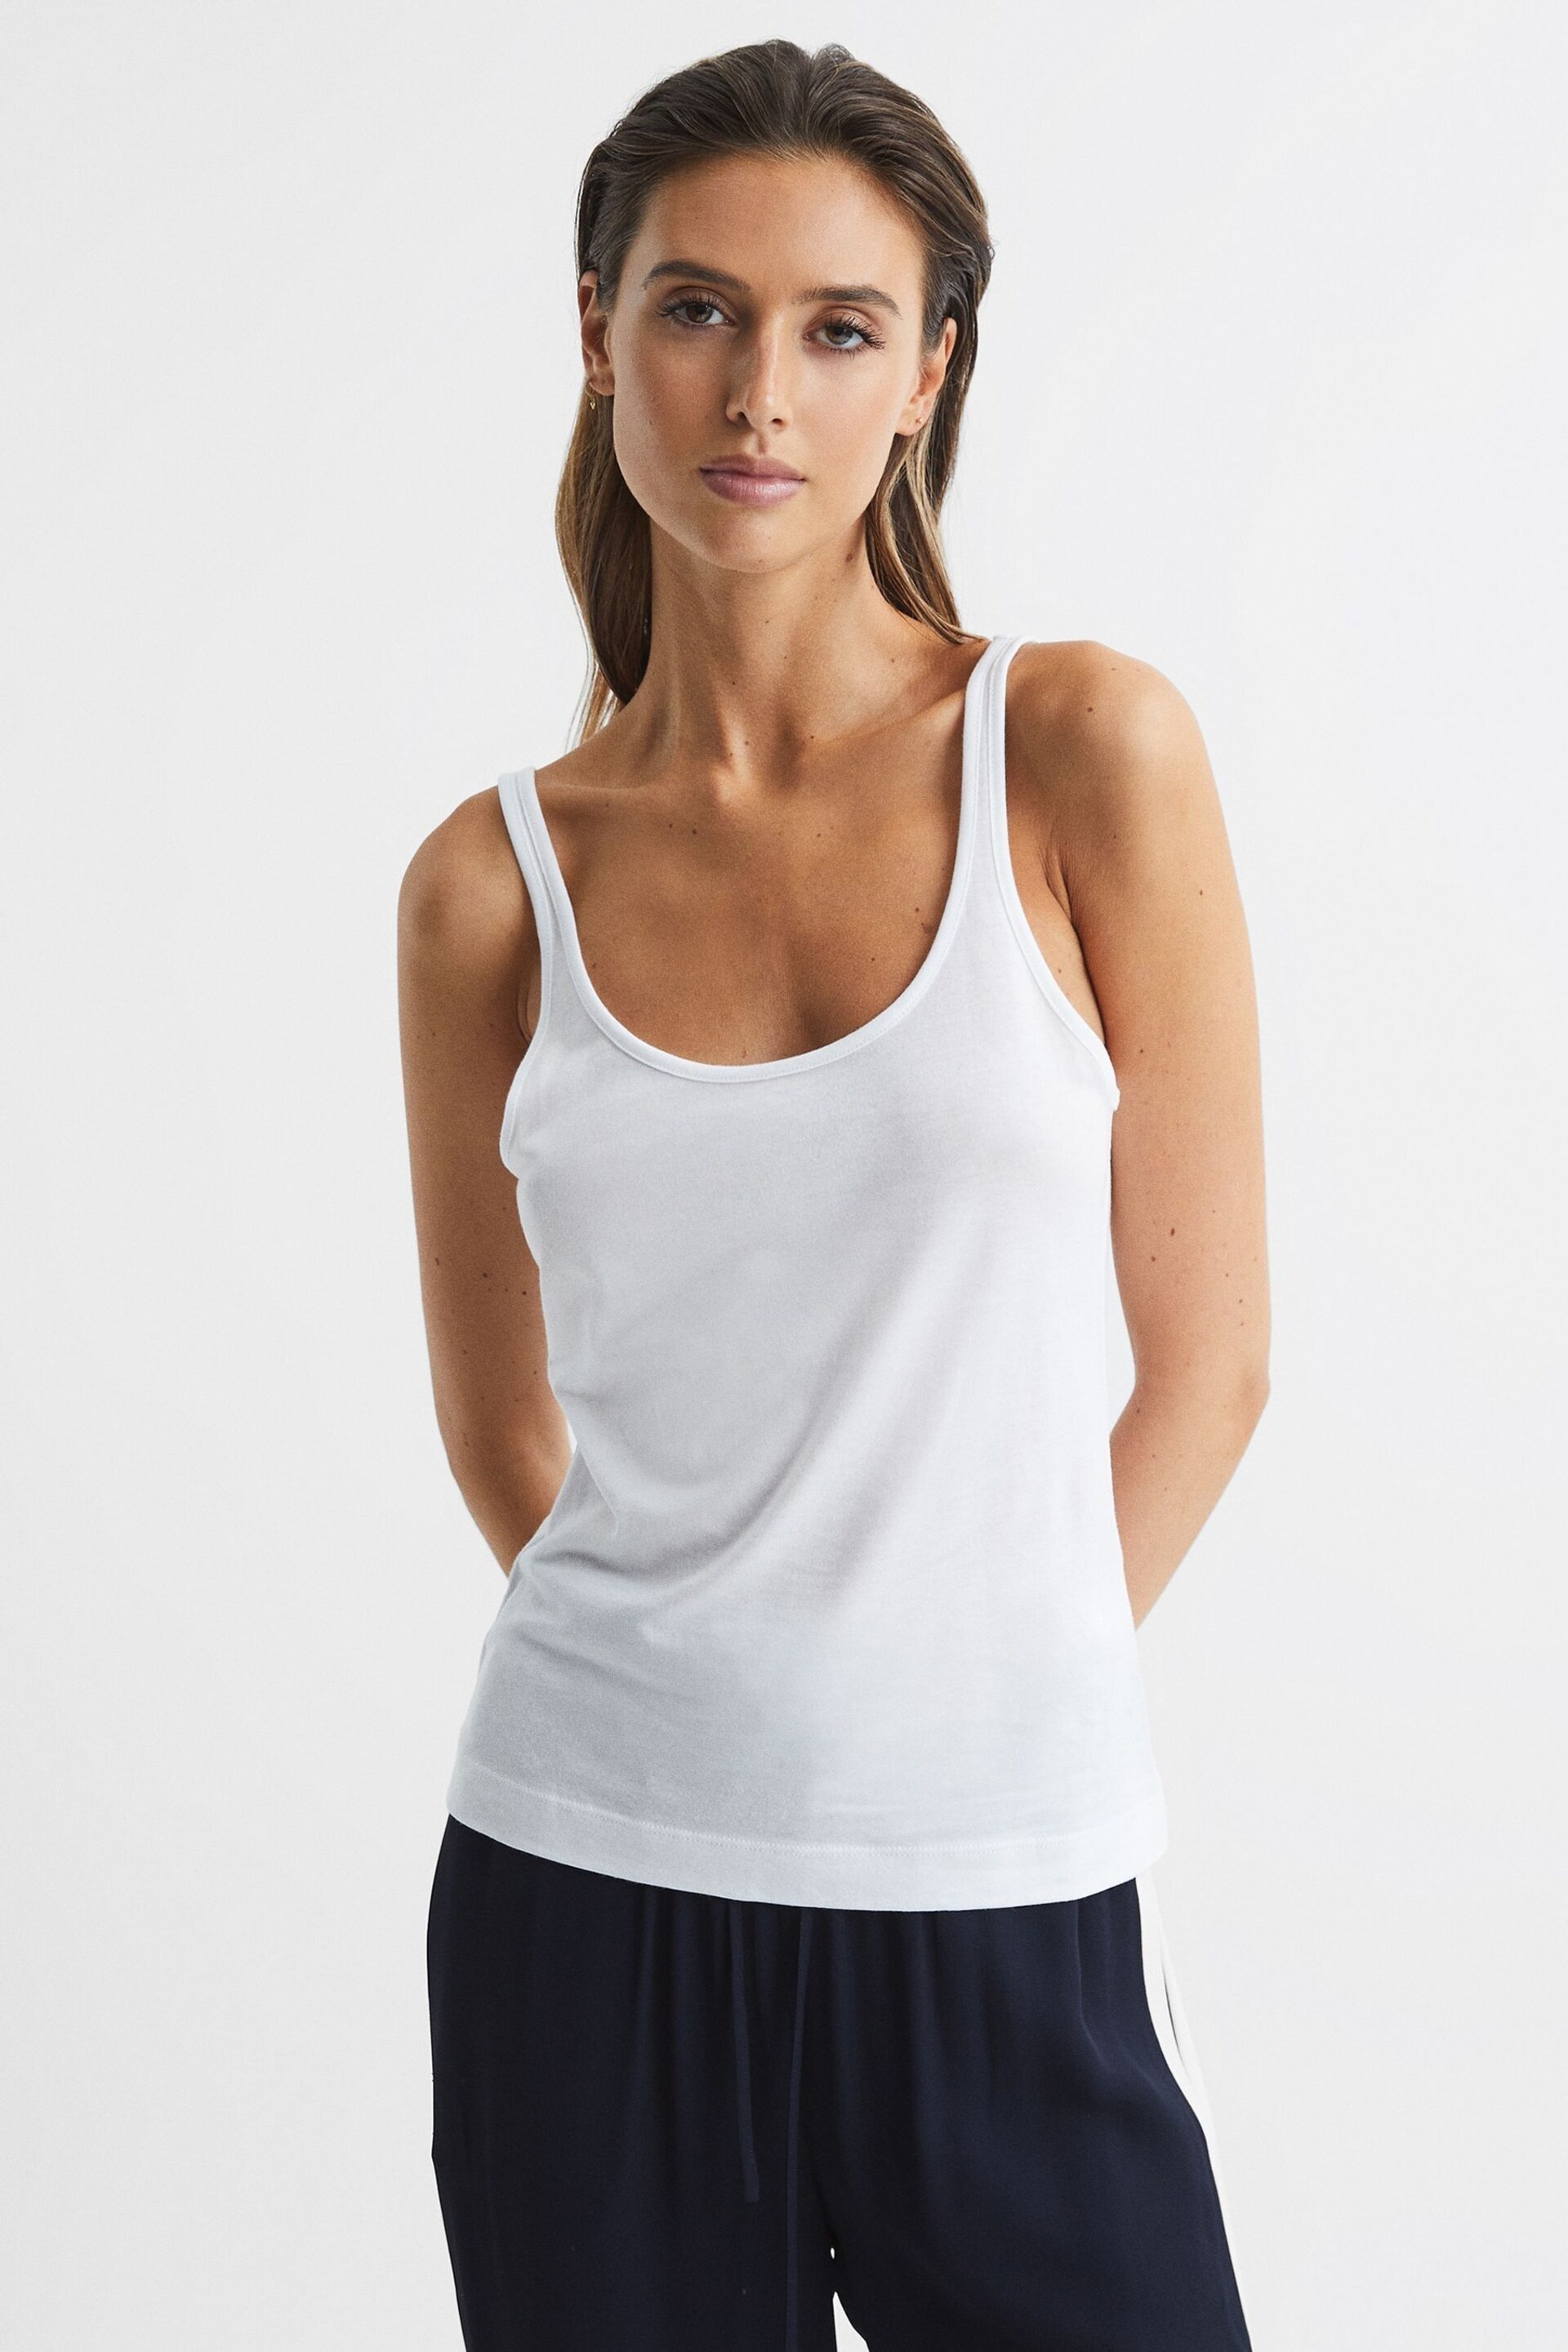 Reiss White Arla Scoop Neck Second Skin Vest Top - Image 1 of 6